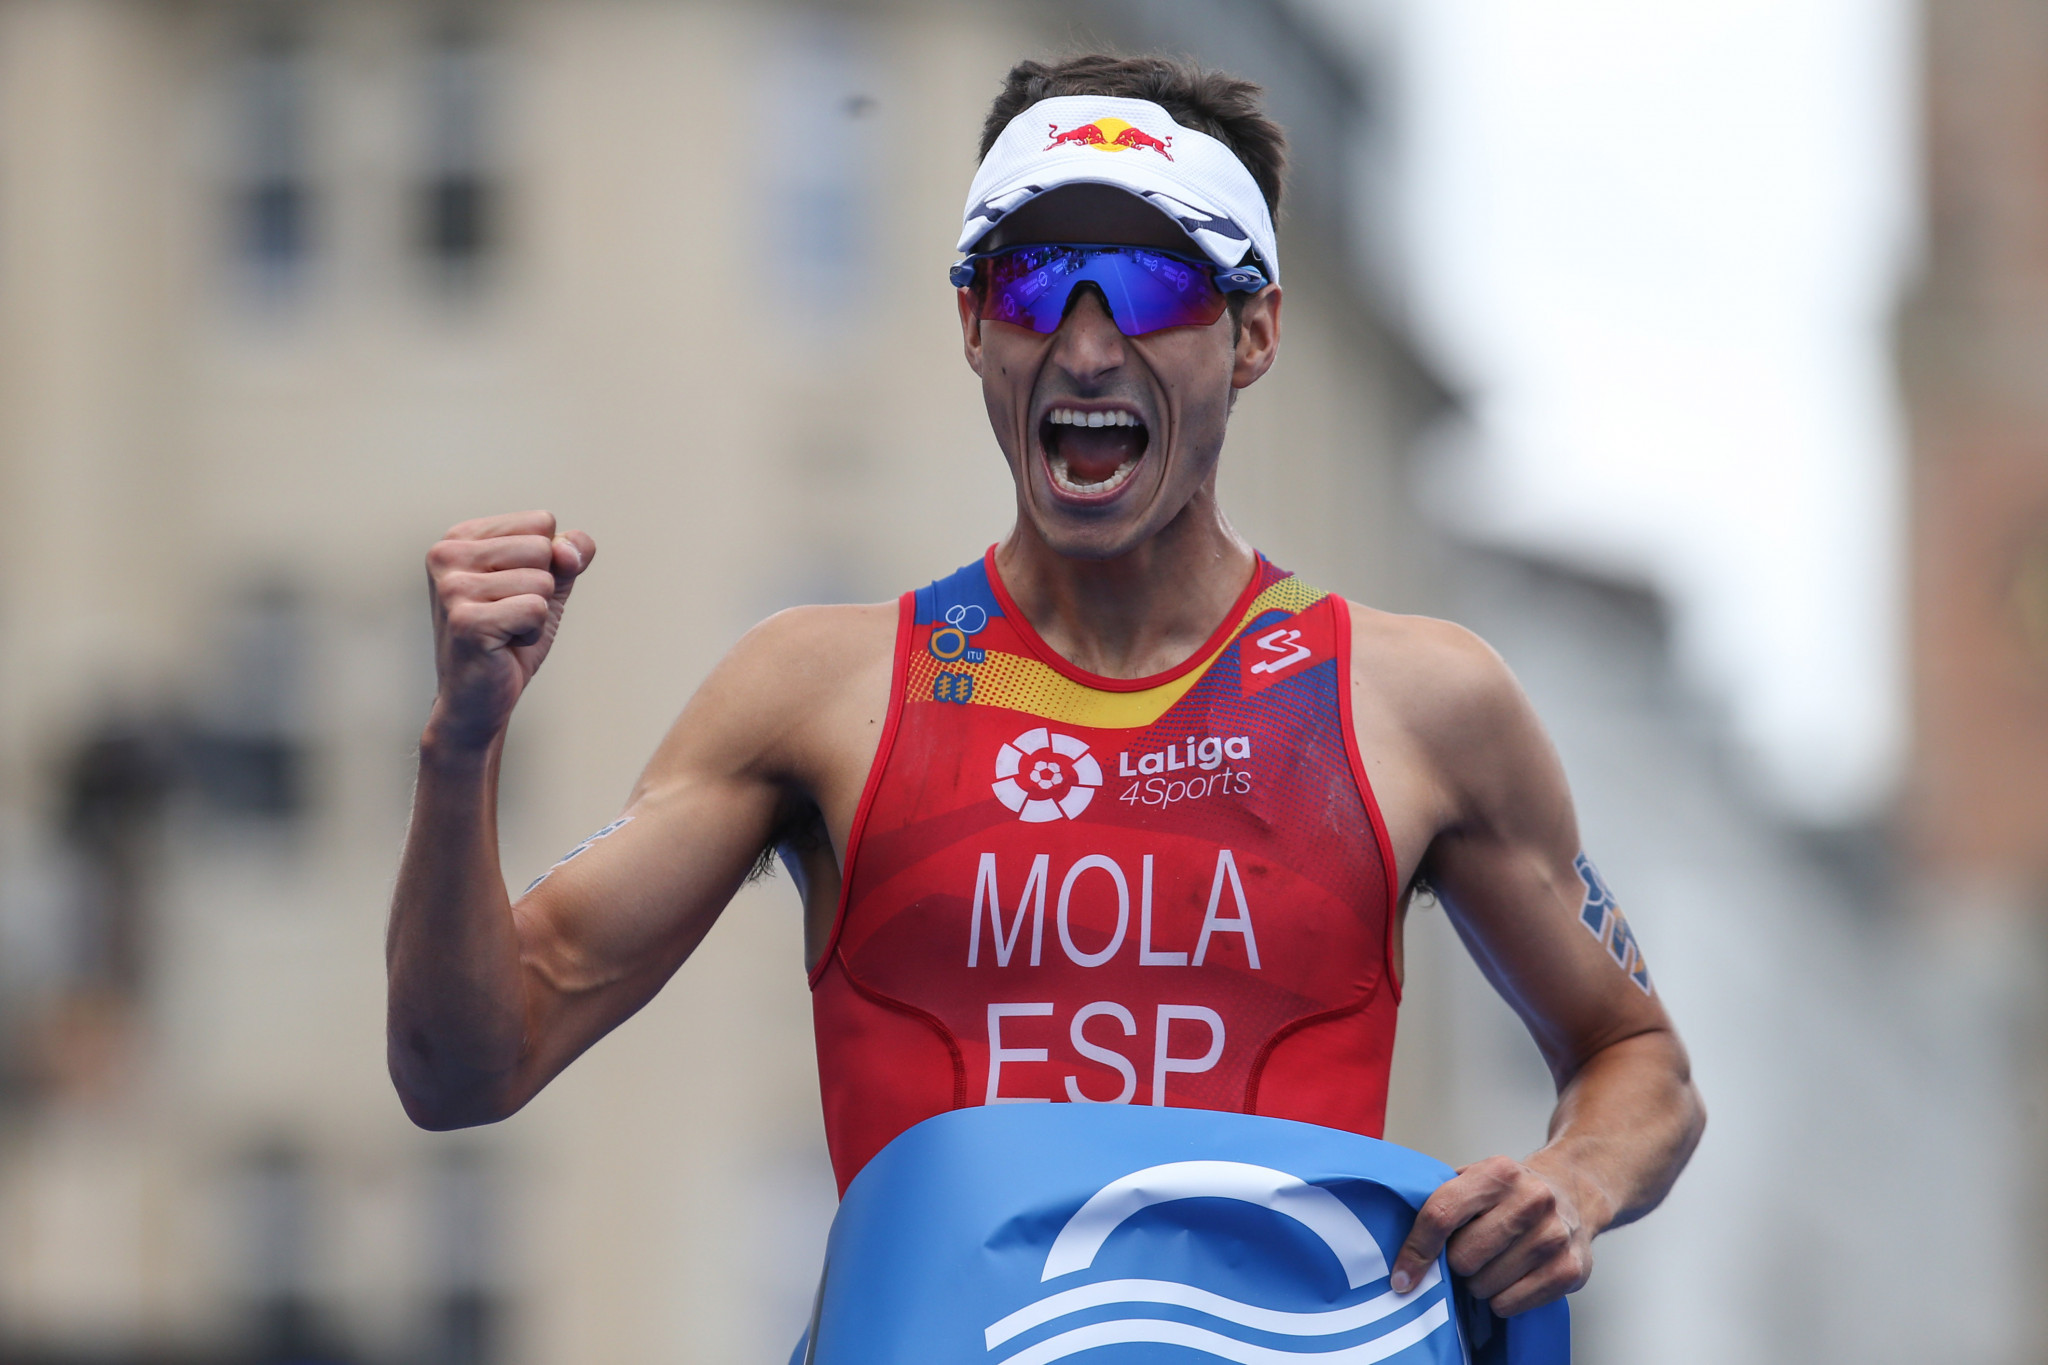 Mola wins World Triathlon Series event in Hamburg for third year in a row